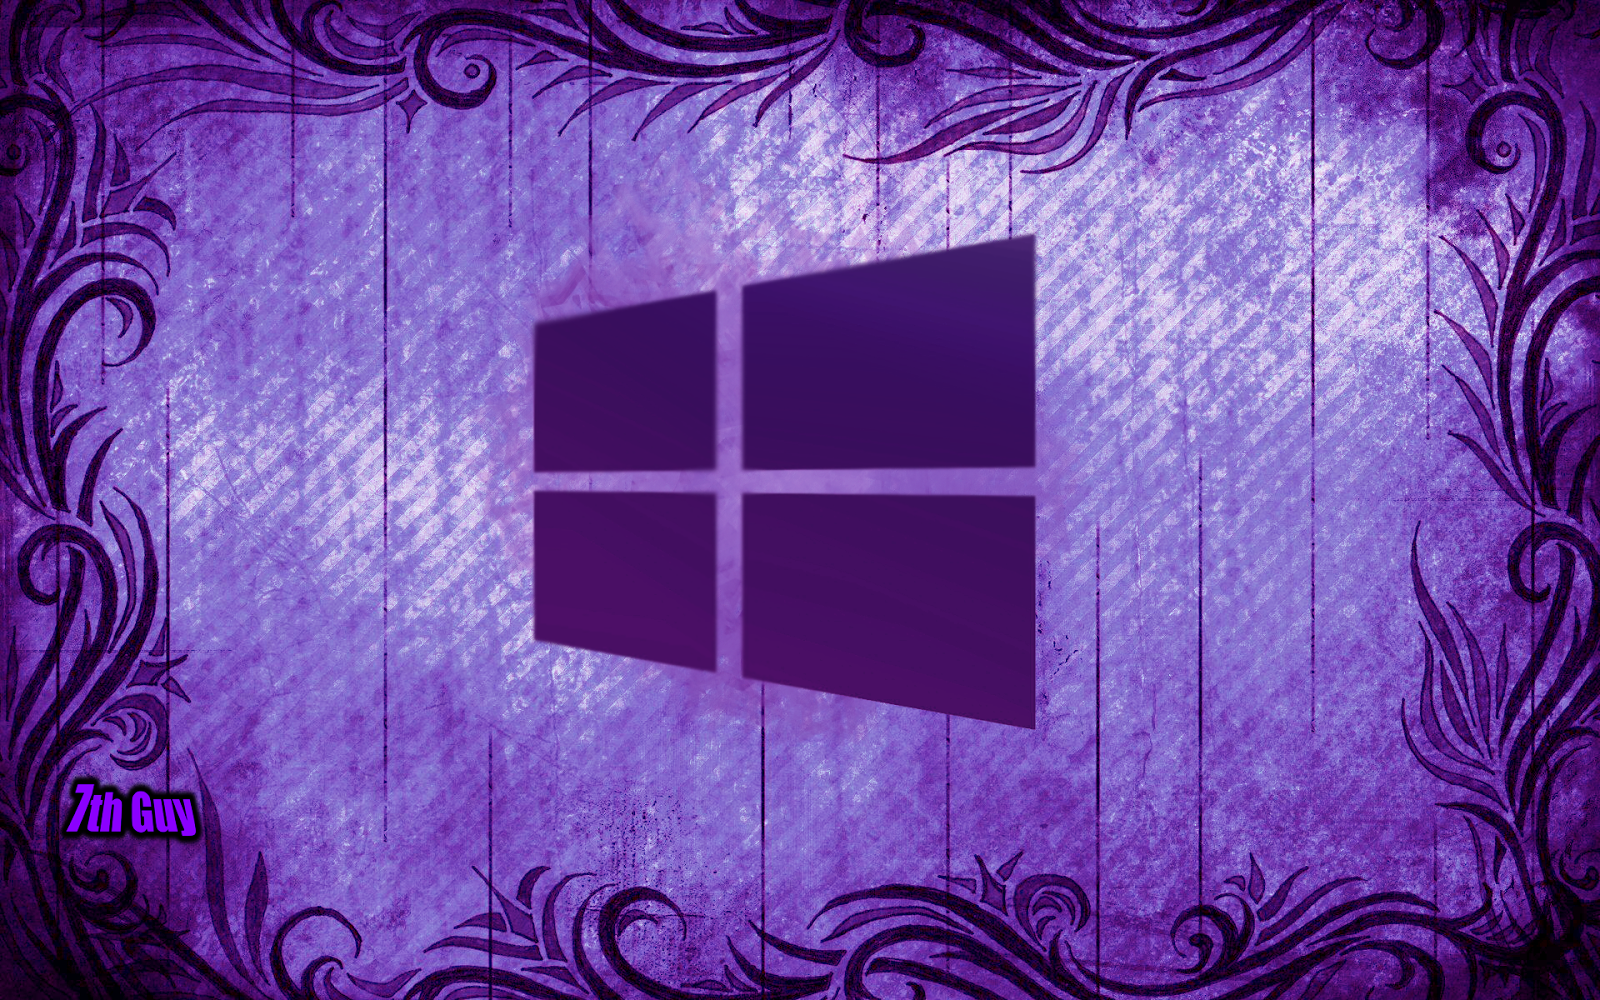 7th Guy Wallpapers Windows 8 Purple Tribal Wallpaper